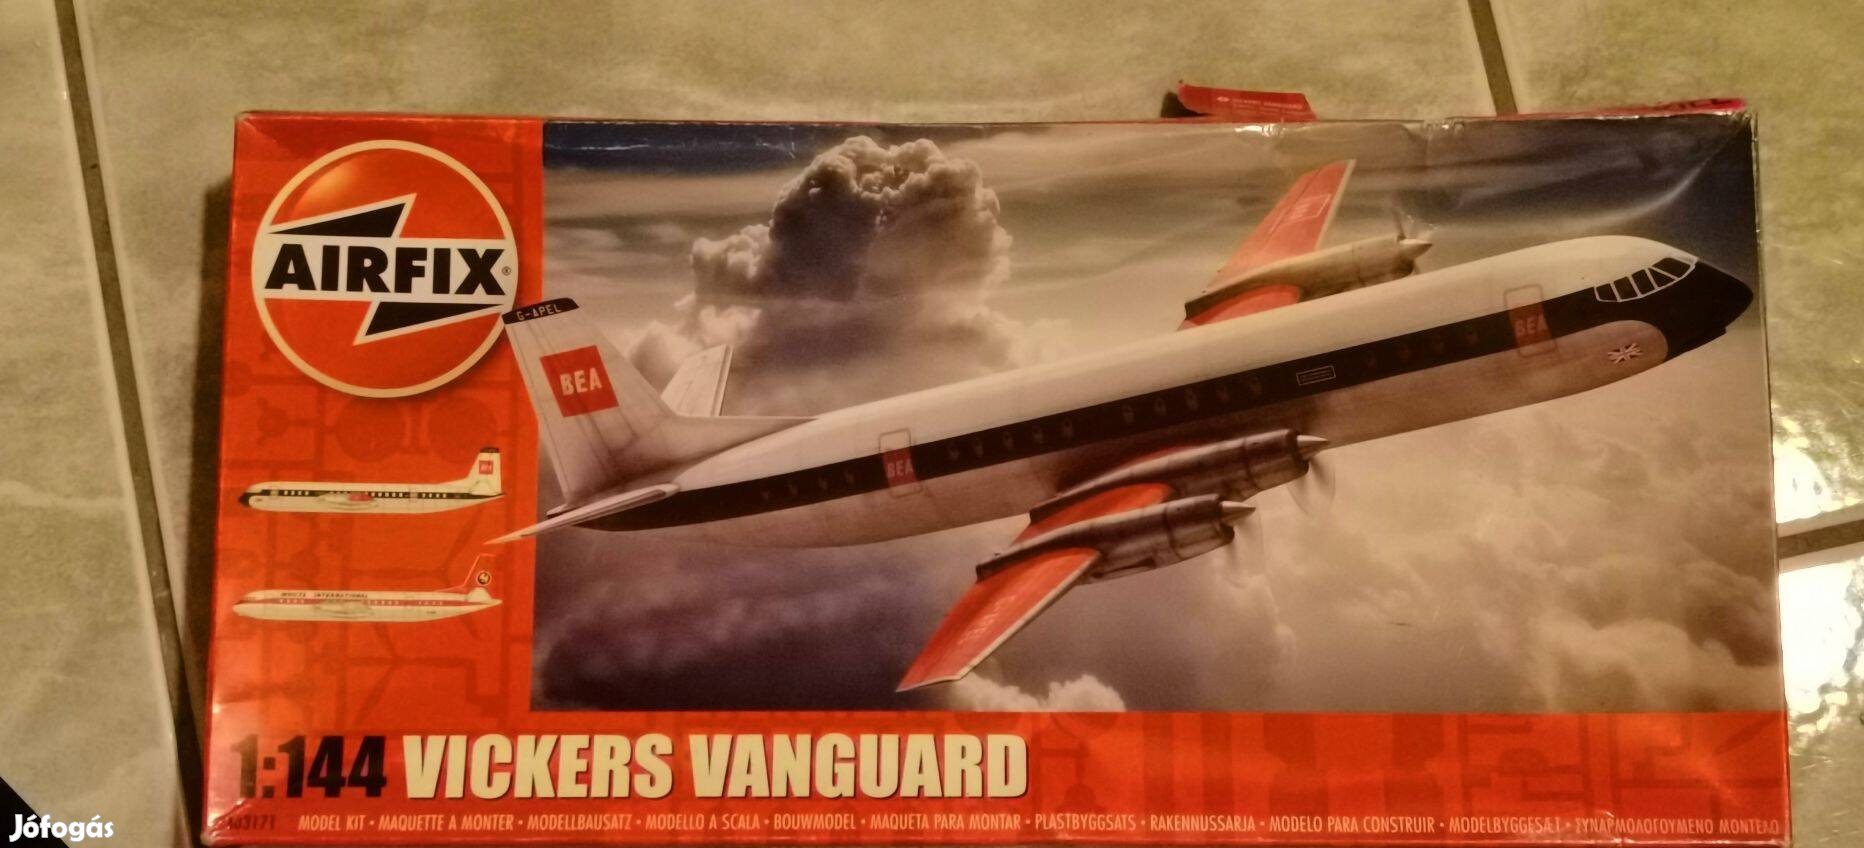 Airfix 03171 Vickers Vanguard, 1:144,